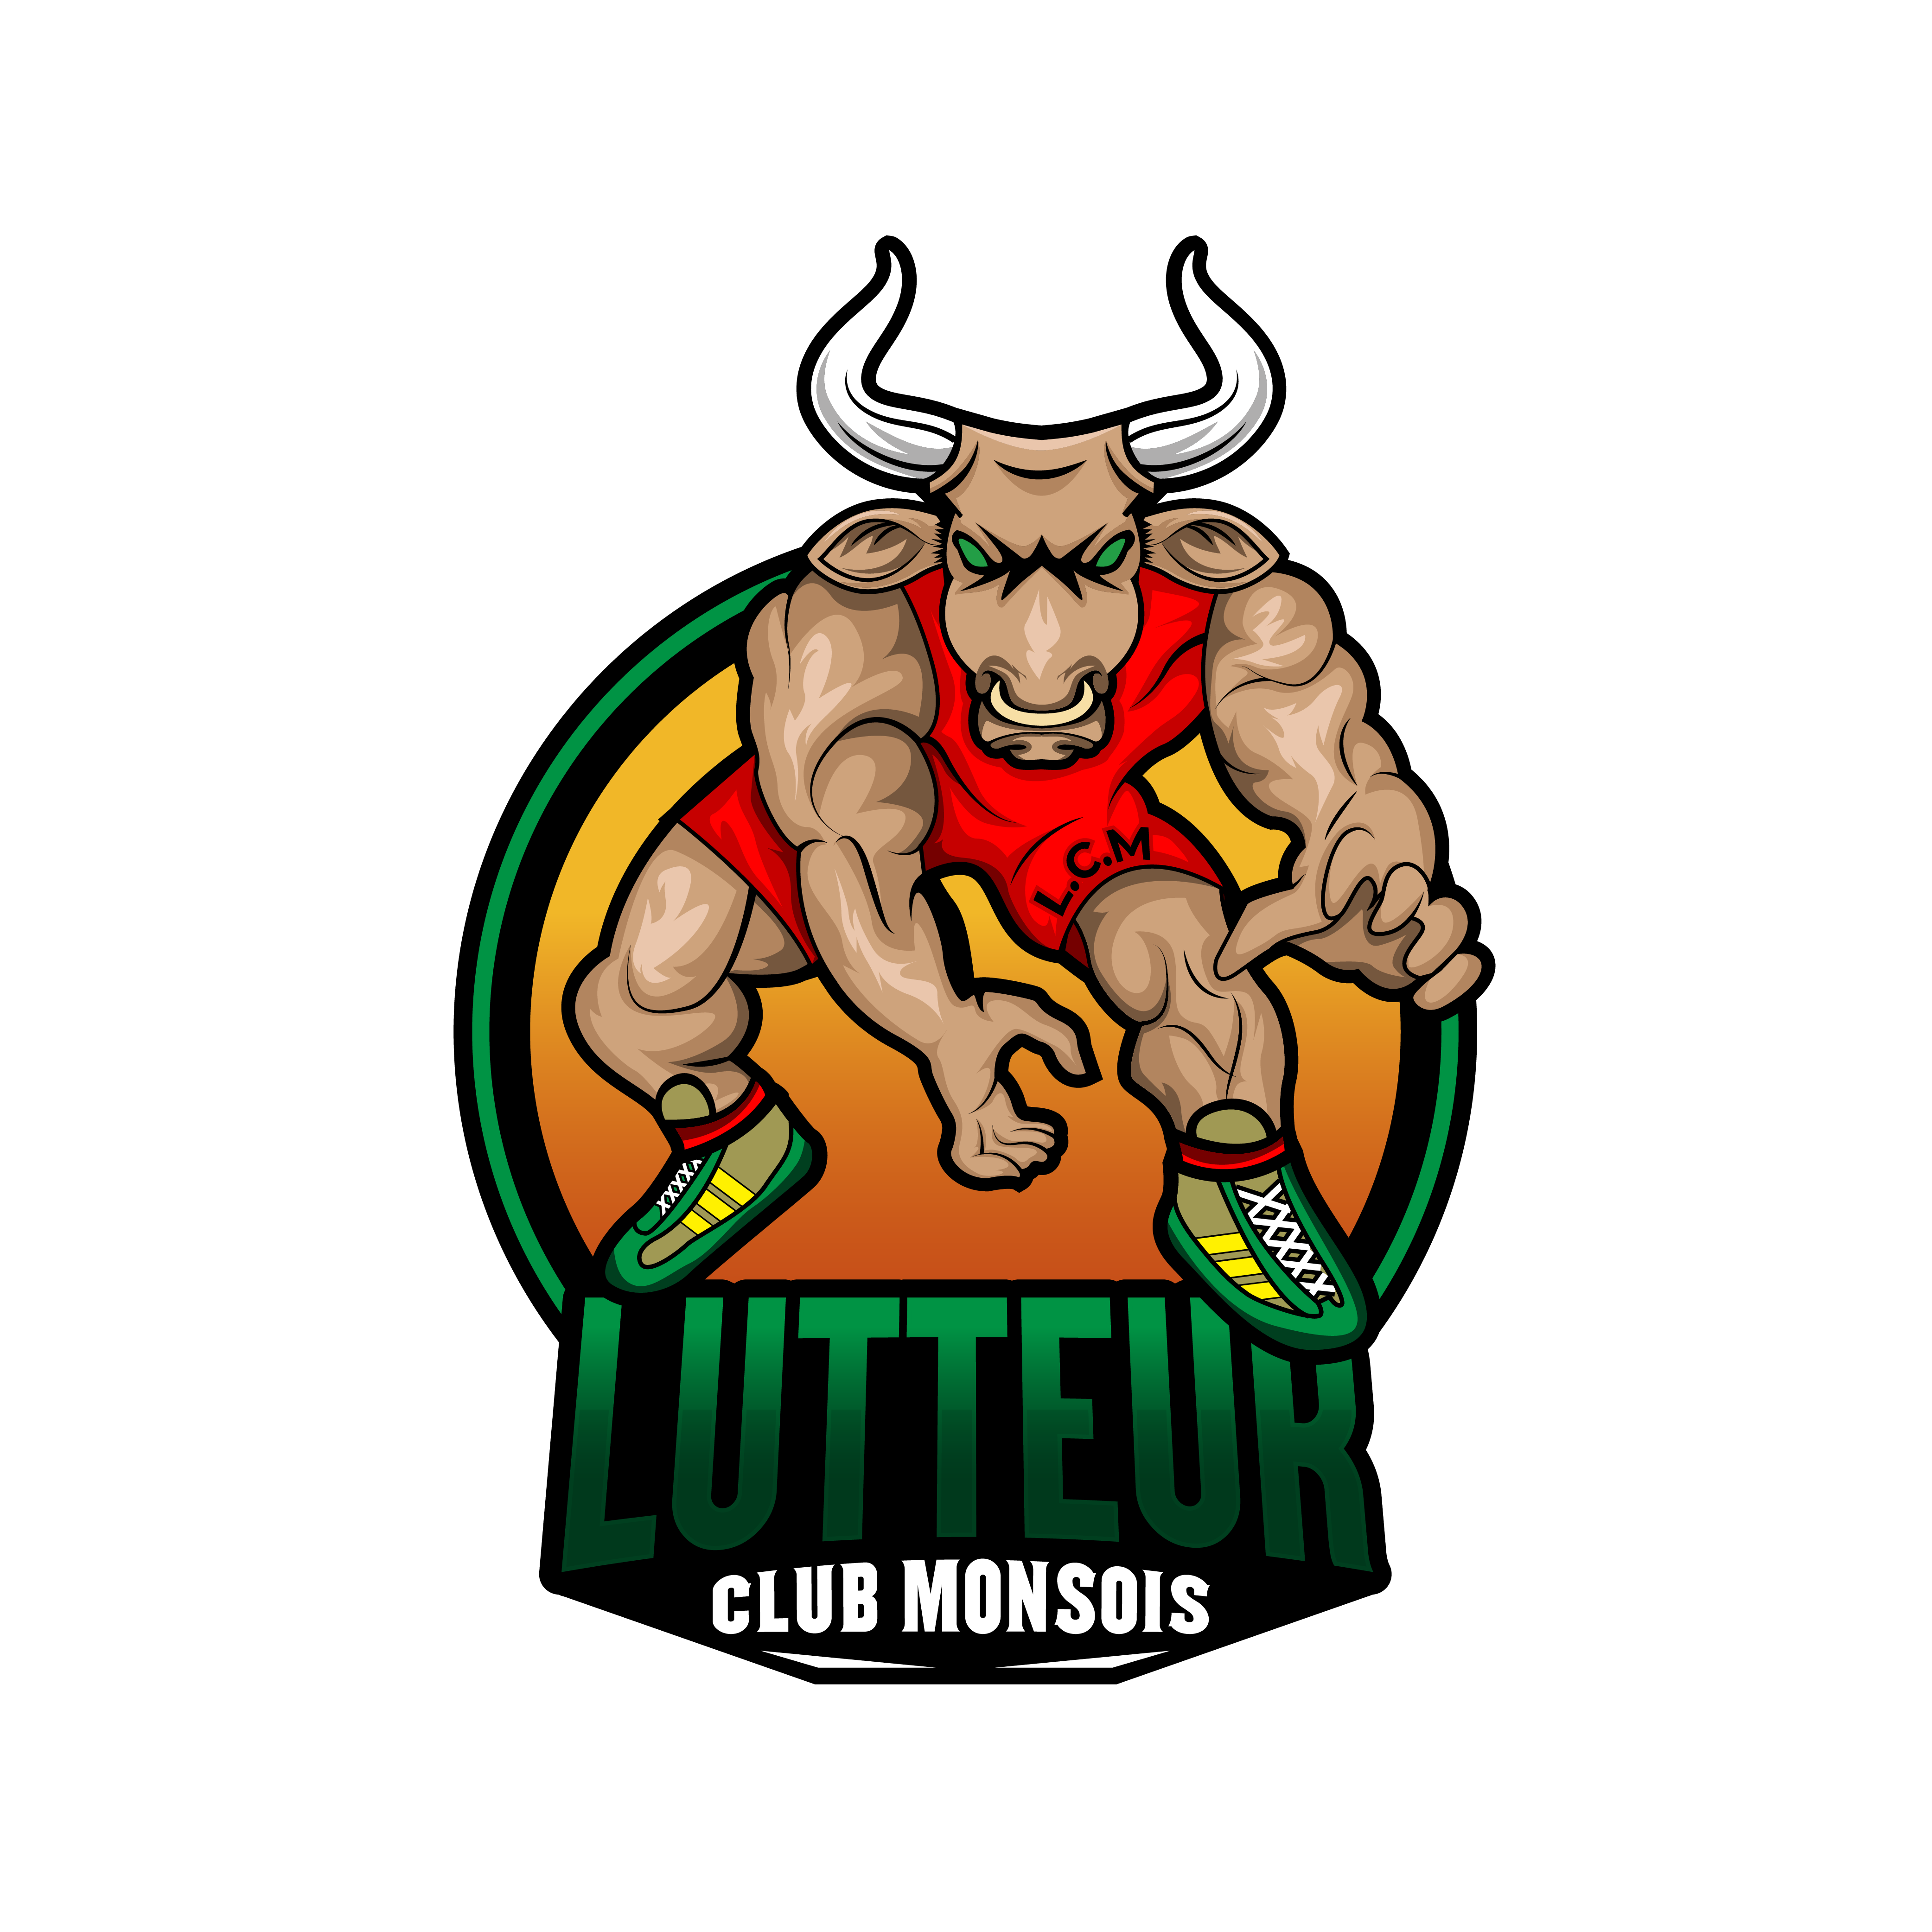 Logo club LUTTEUR CLUB MONSOIS